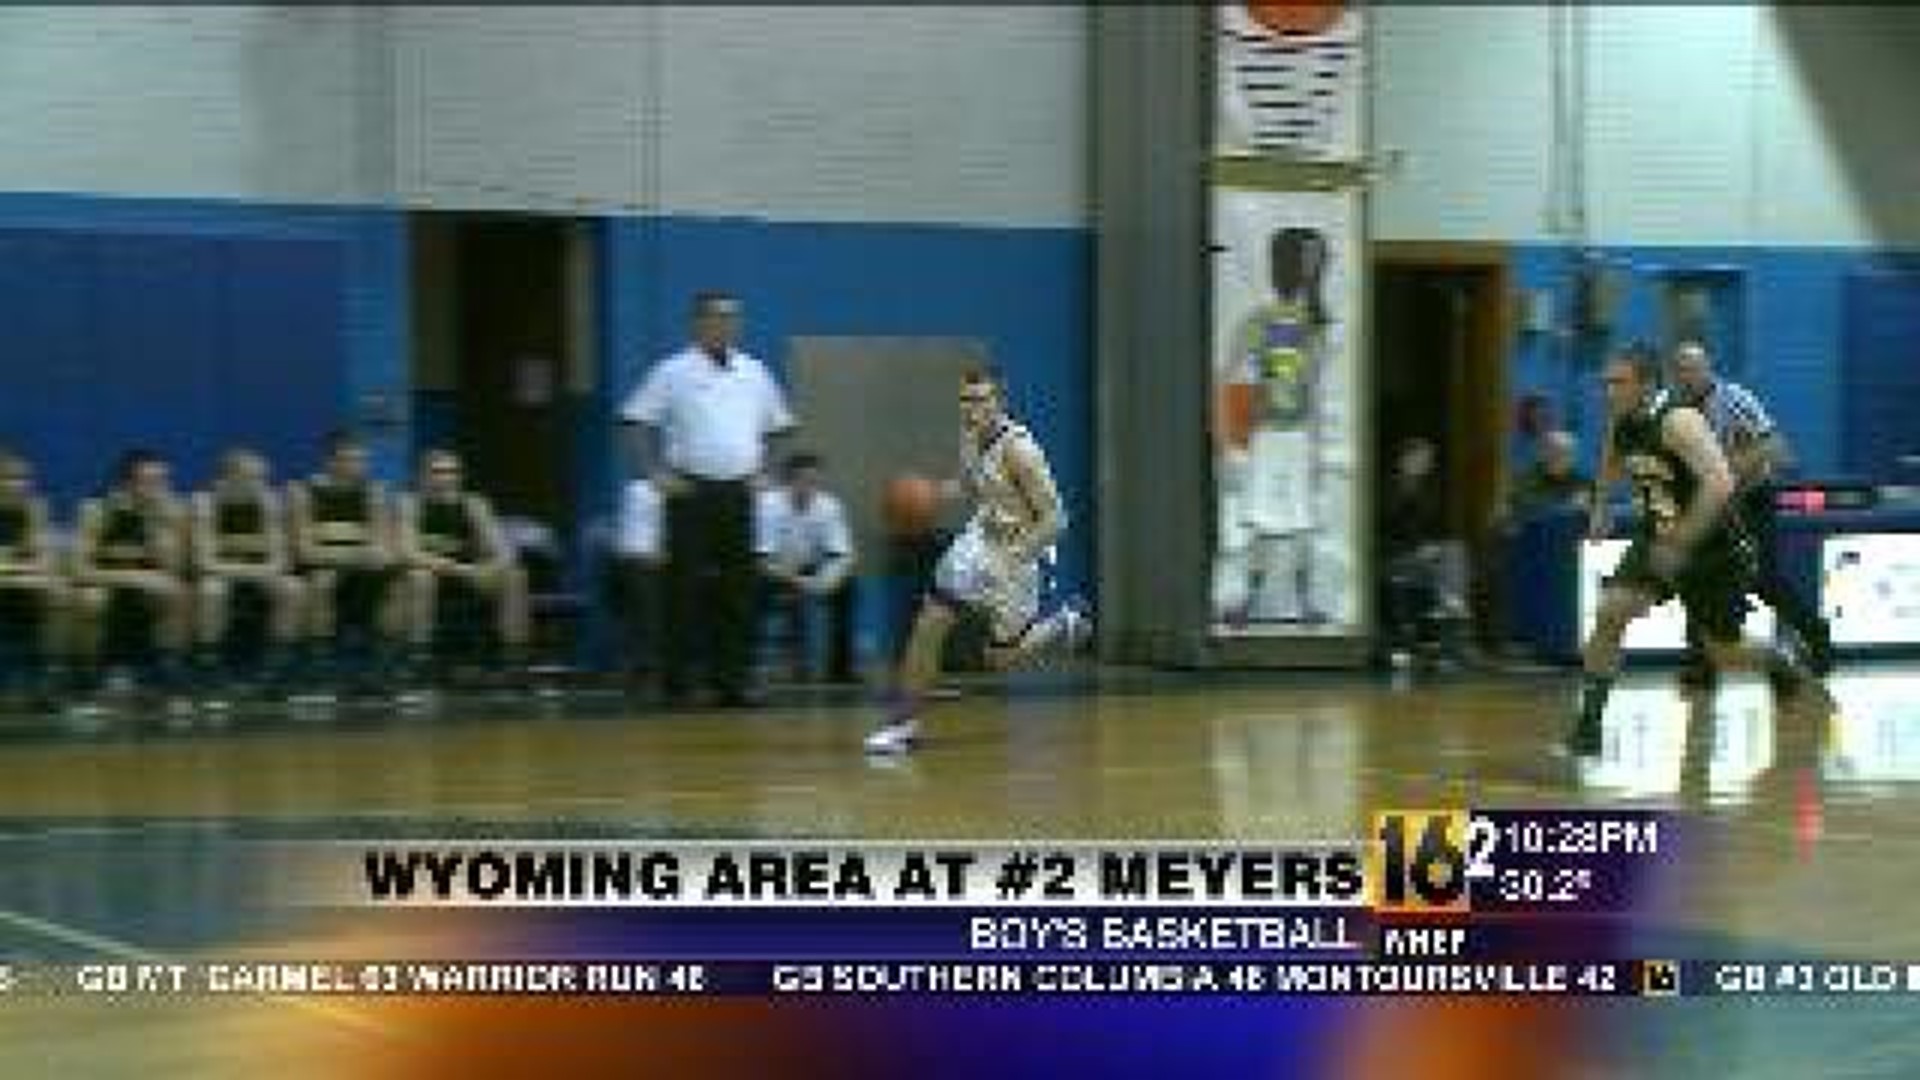 #2 Meyers vs Wyoming Area